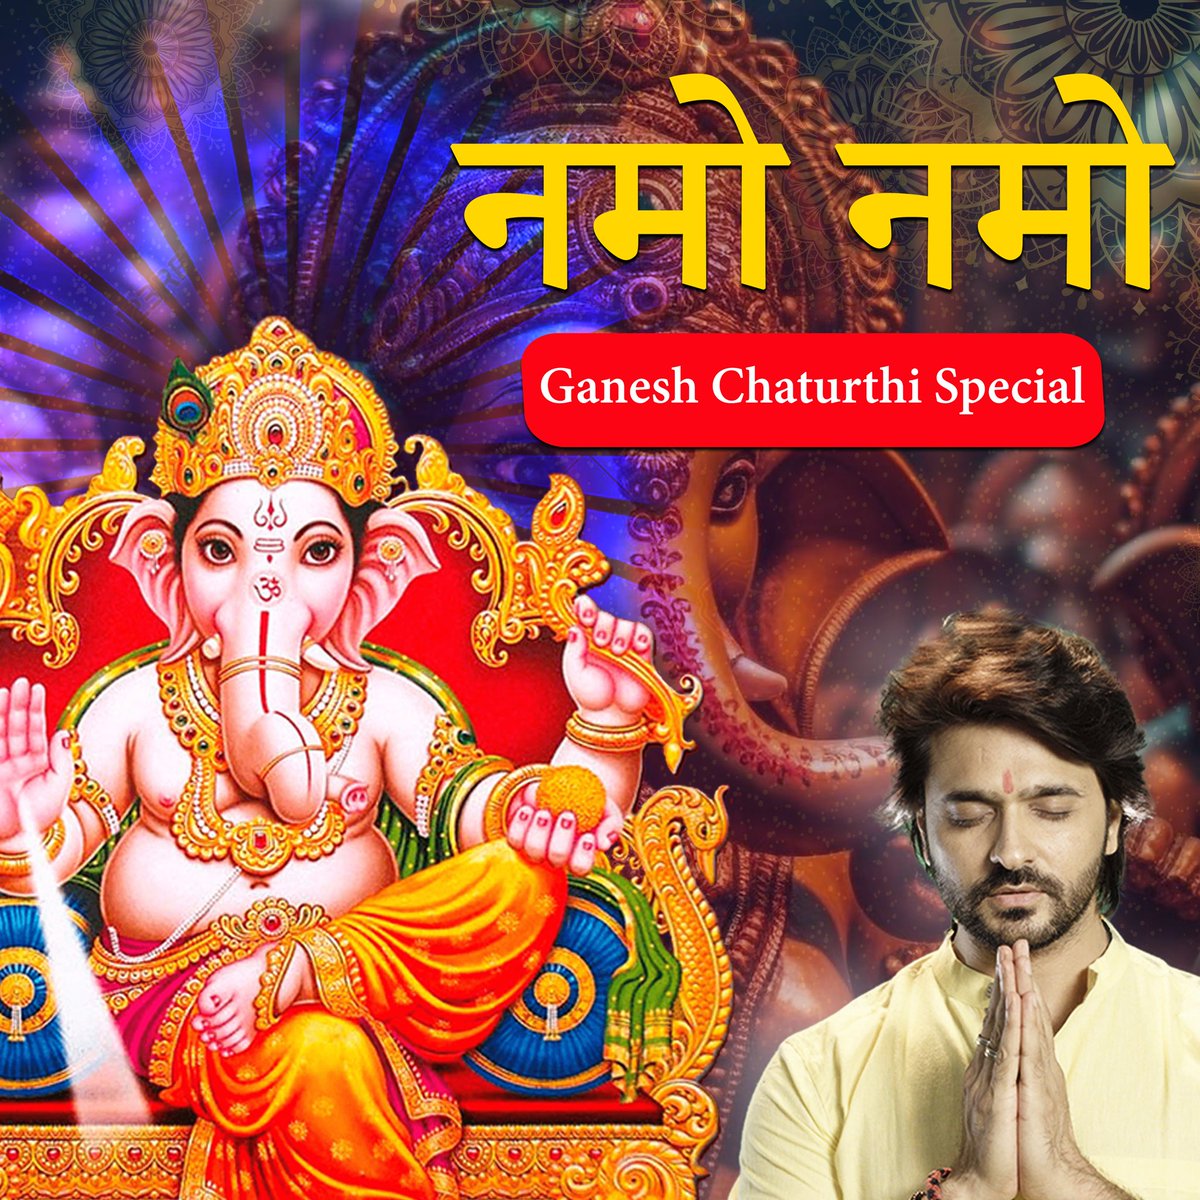 youtube.com/@ManchBhakti?s… Happy to announce our new channel Manch Bhakti. Subscribe to watch some premium devotional content! Congratulations @manchstudios Family!! @RachayitaFilms @ArchanaTaide @Animeshverma06 @calalitmohan #ganeshachaturthi #Ganesha #namo